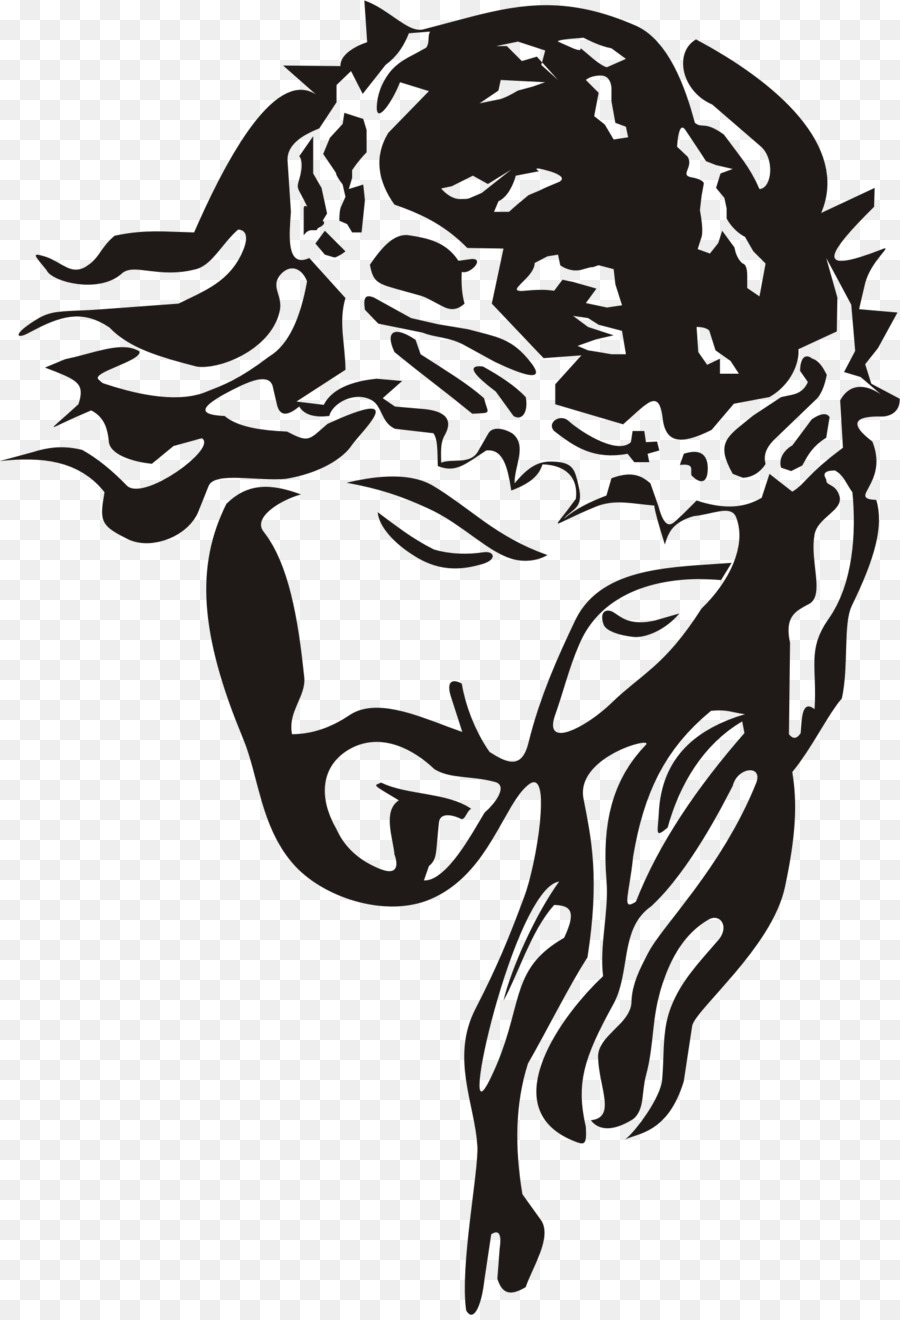 Stencil Clip art - jesus christ png download - 1536*2245 - Free Transparent Stencil png Download.